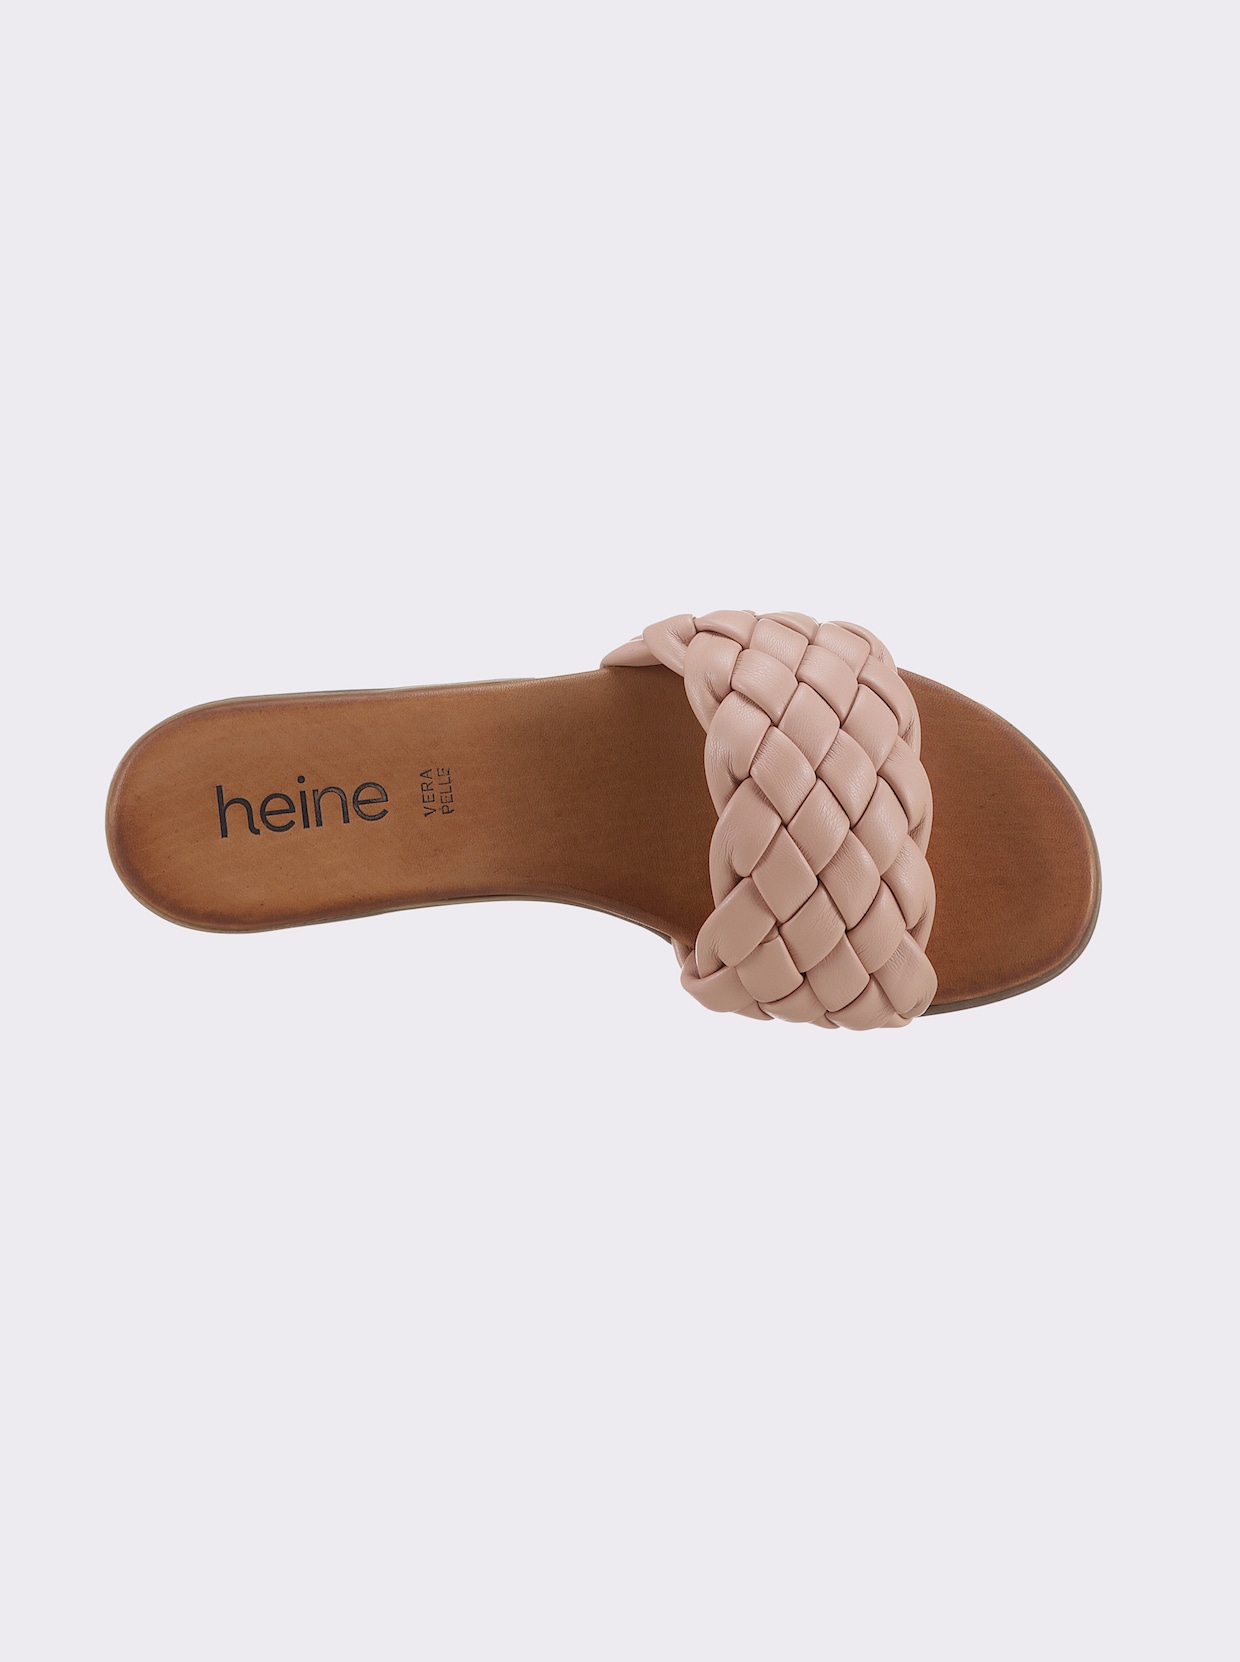 heine slippers - roze